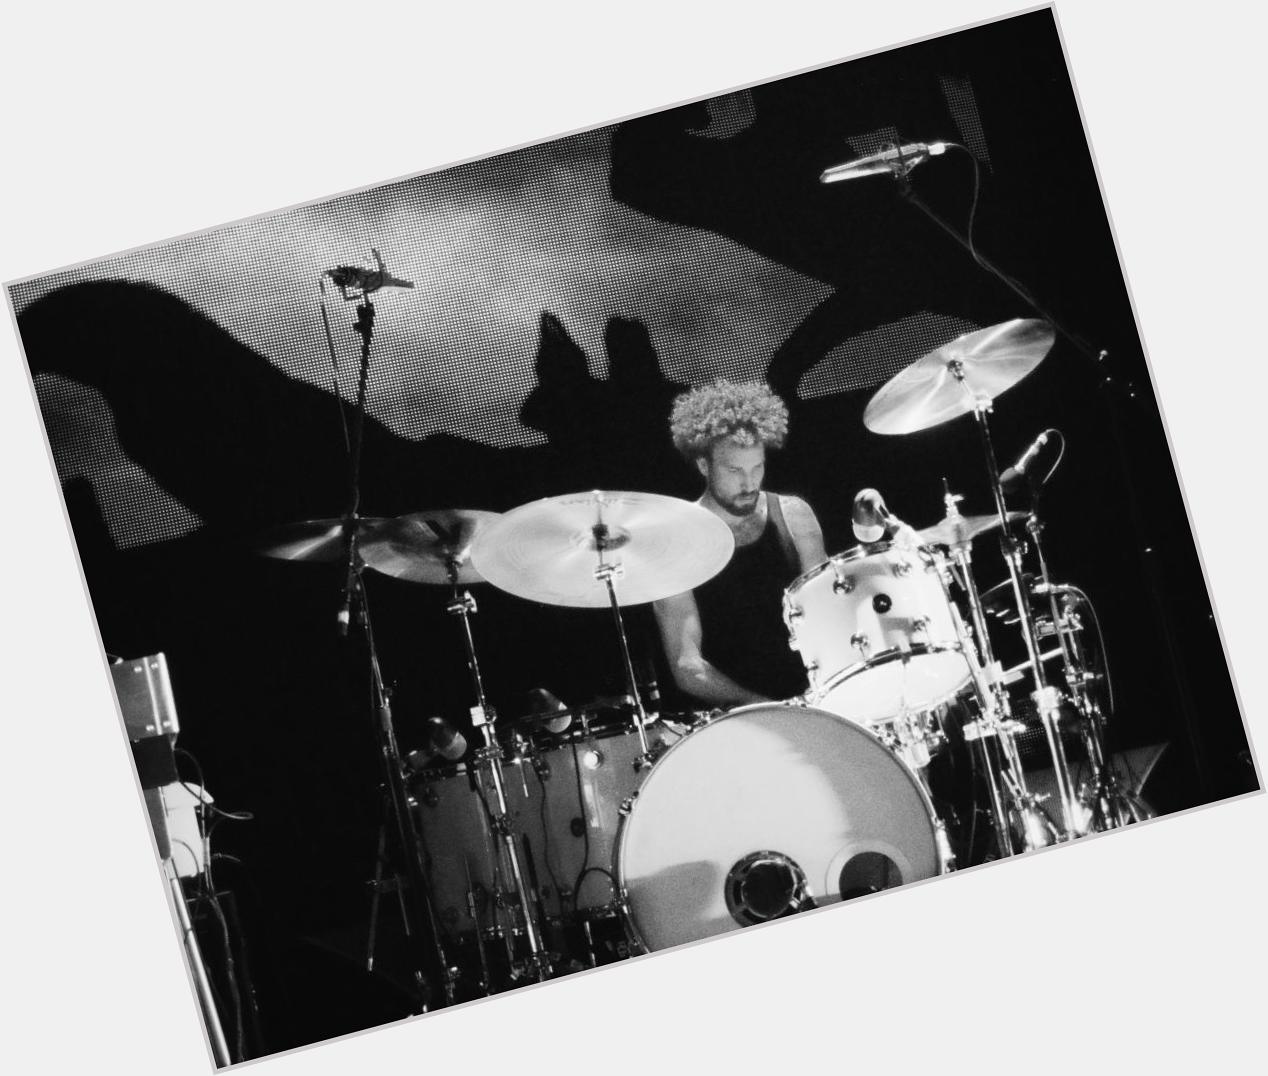 Happy birthday to one of my favorite drummers, Jon Theodore 